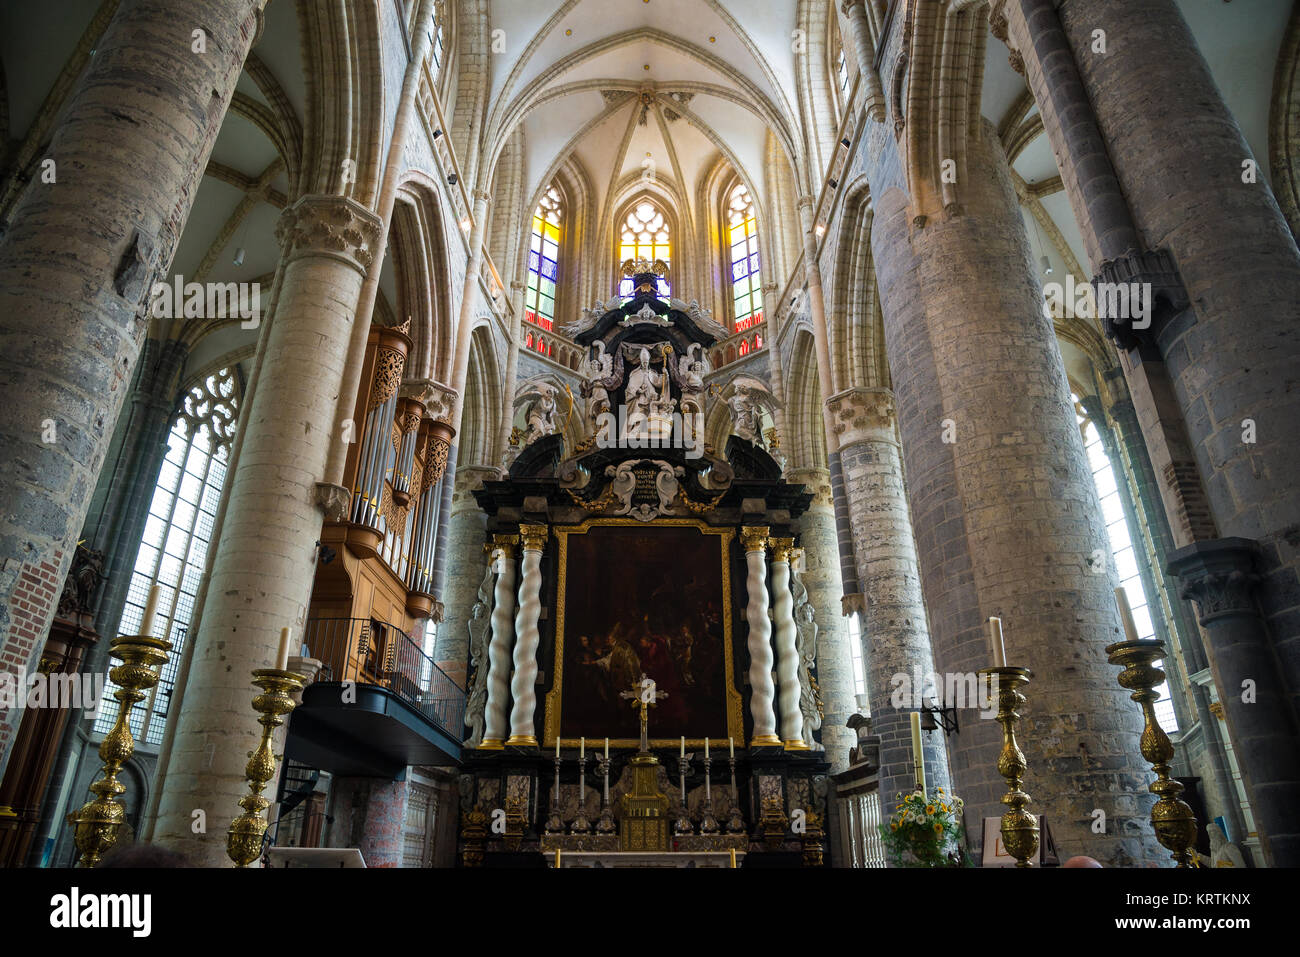 Ghent, Belgium - April 16, 2017: Beautiful view of the interior of the Saint Nicholas' Church in Ghent, Belgium Stock Photo